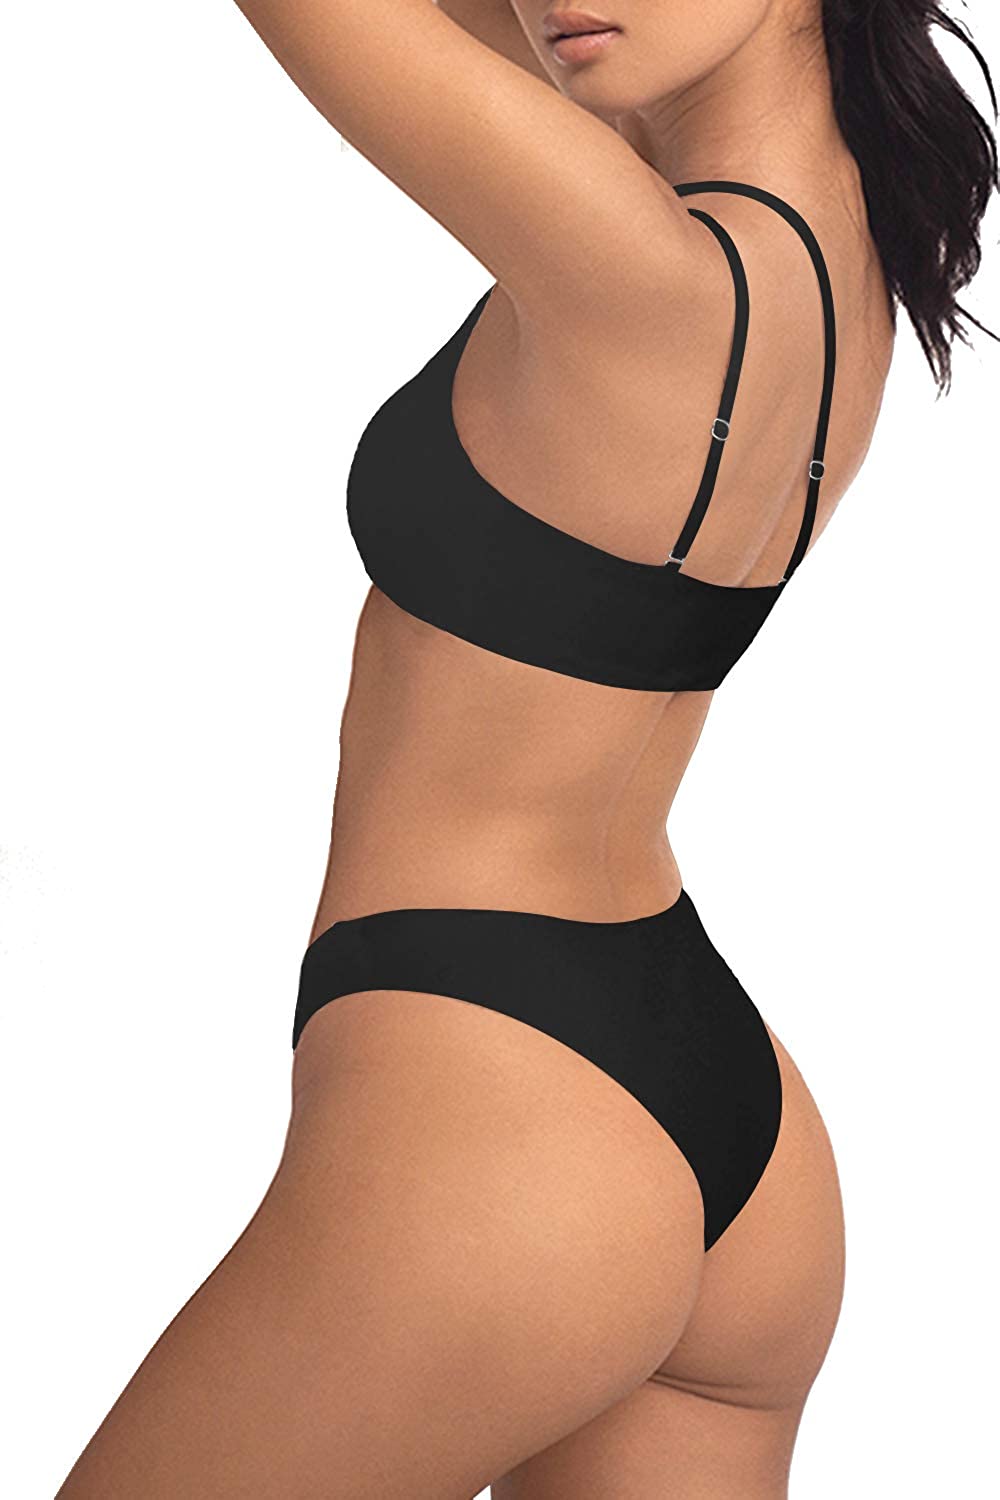 Upopby One Shoulder Bikini Set Swimsuit Side View